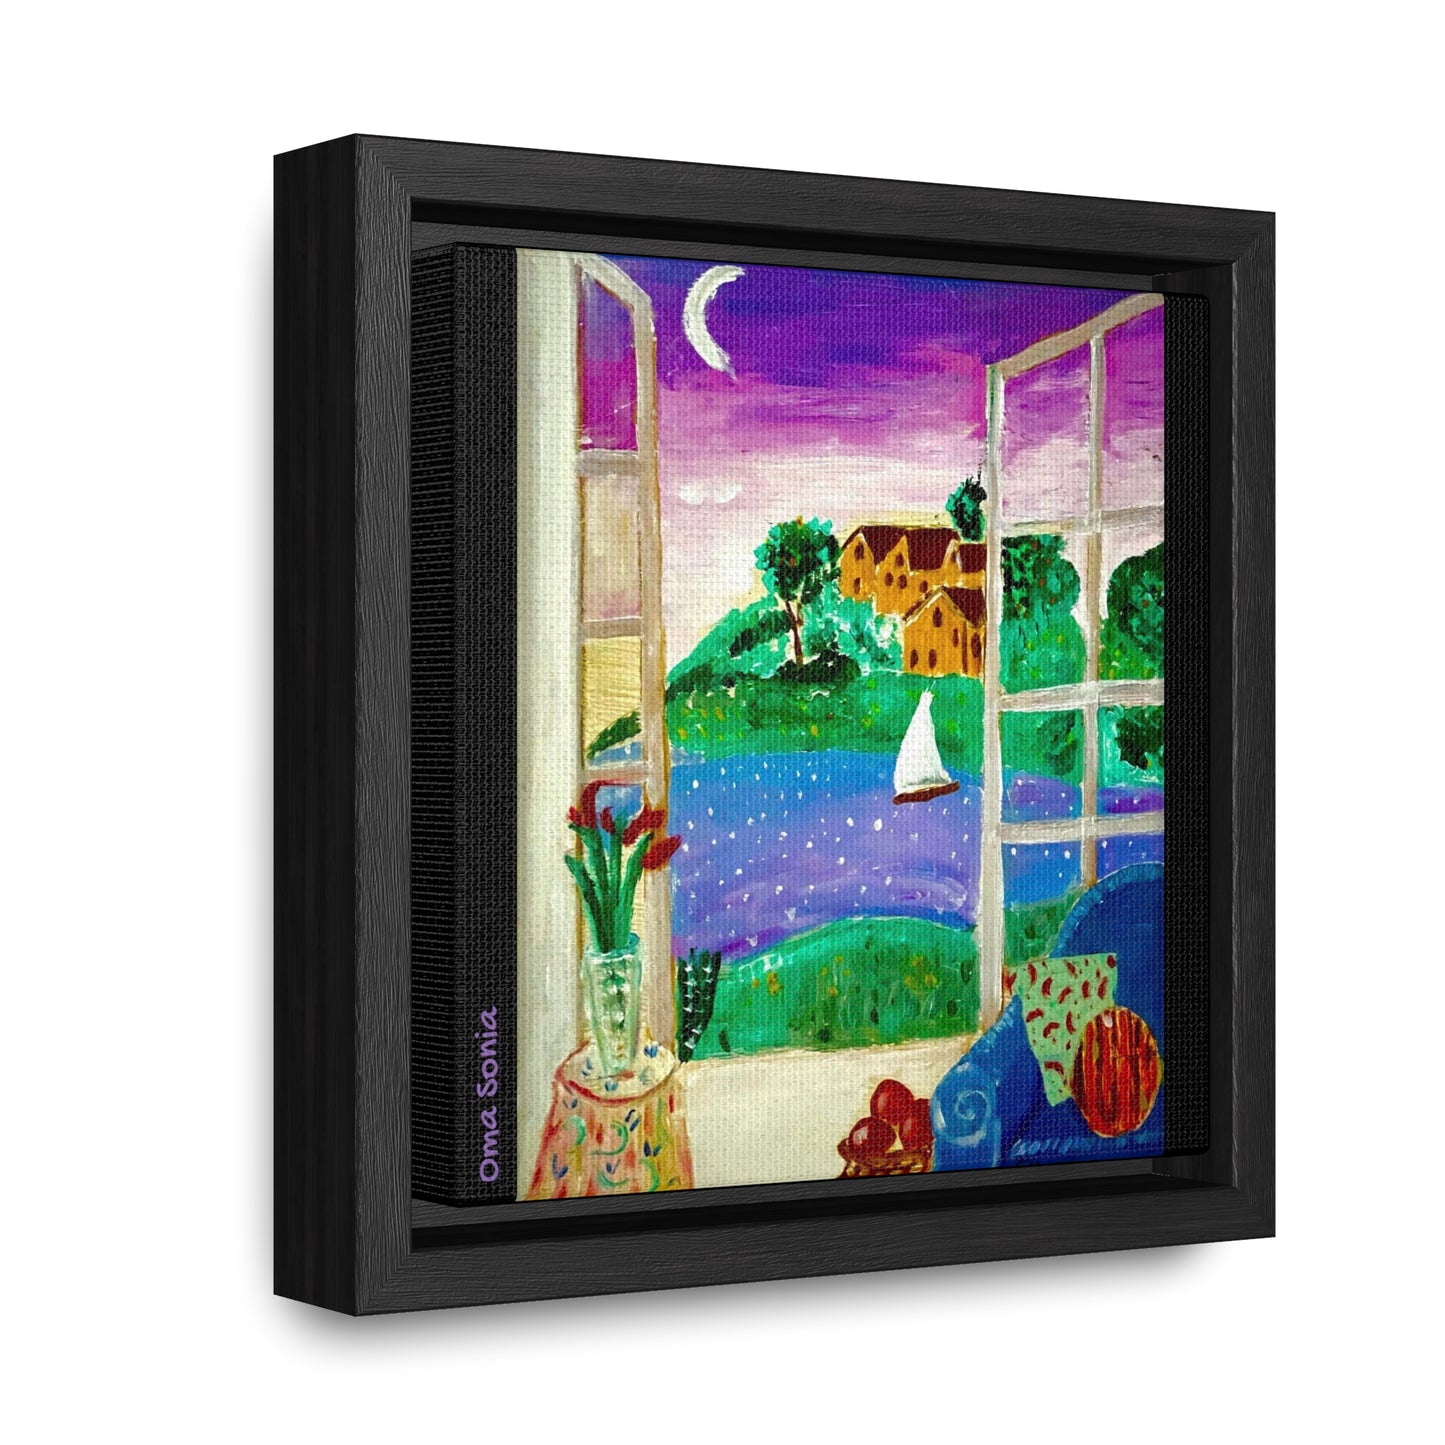 Moonlight Sail - framed mini-print on canvas